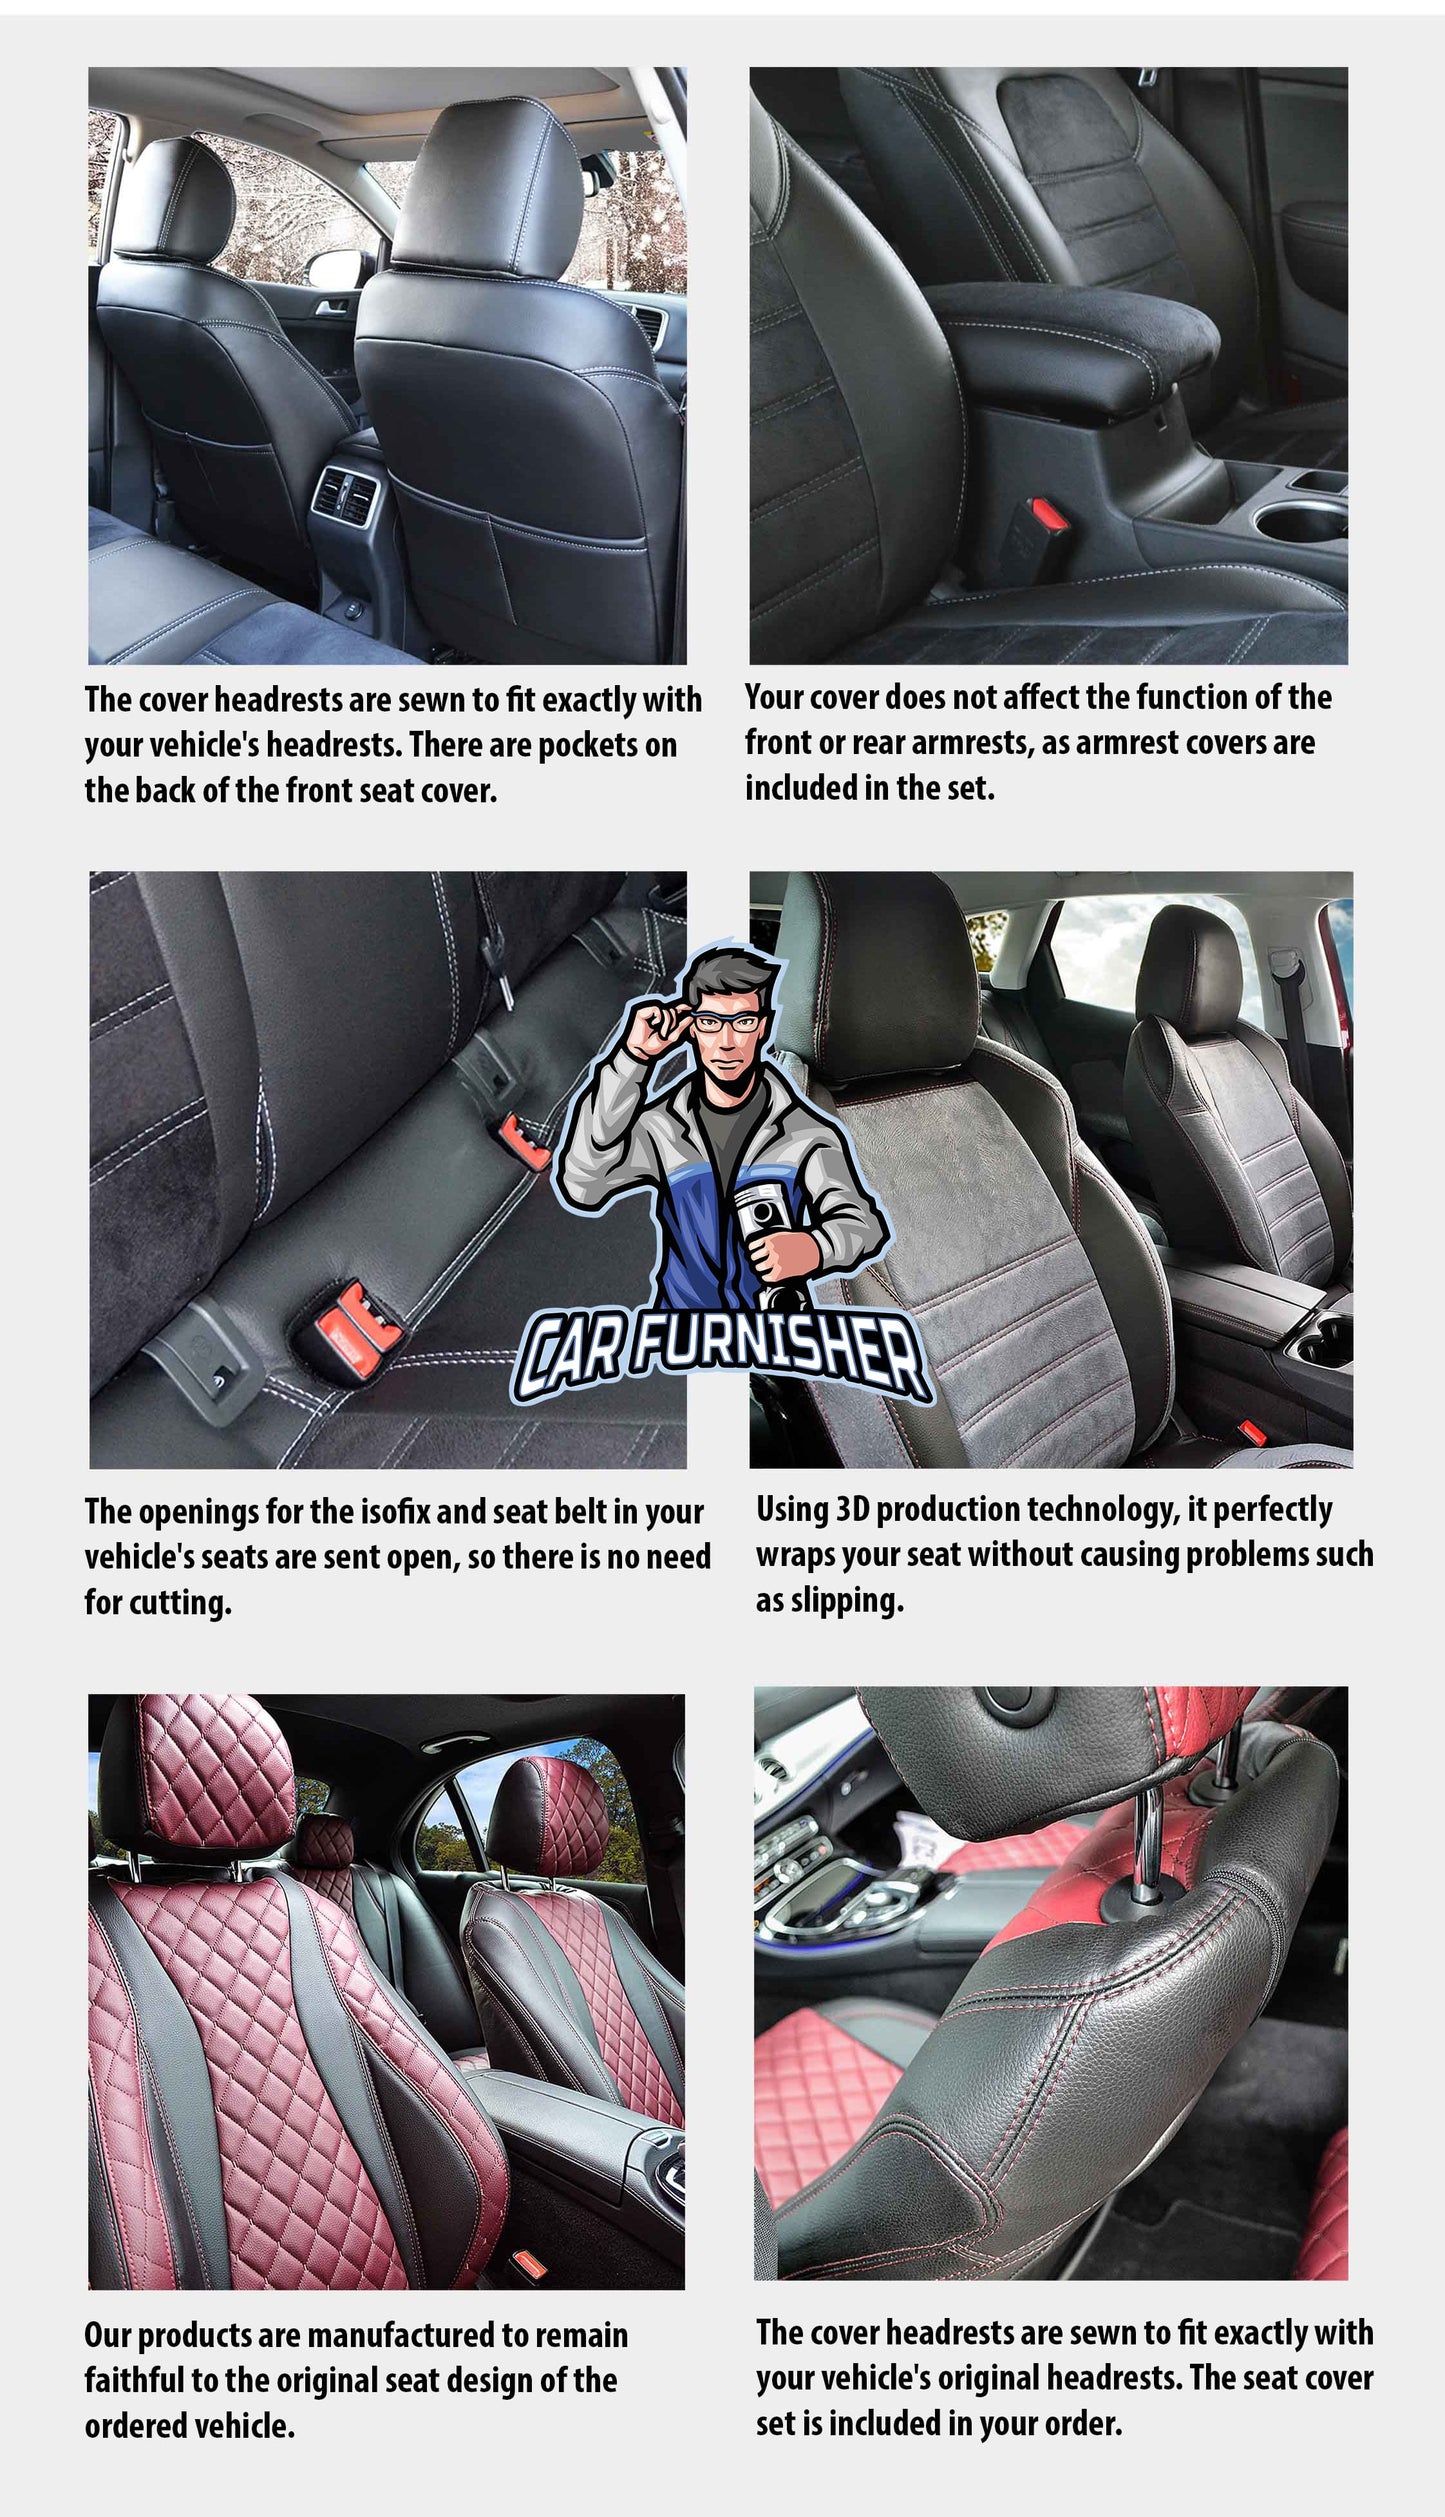 Kia Picanto Seat Covers Original Jacquard Design Dark Gray Jacquard Fabric